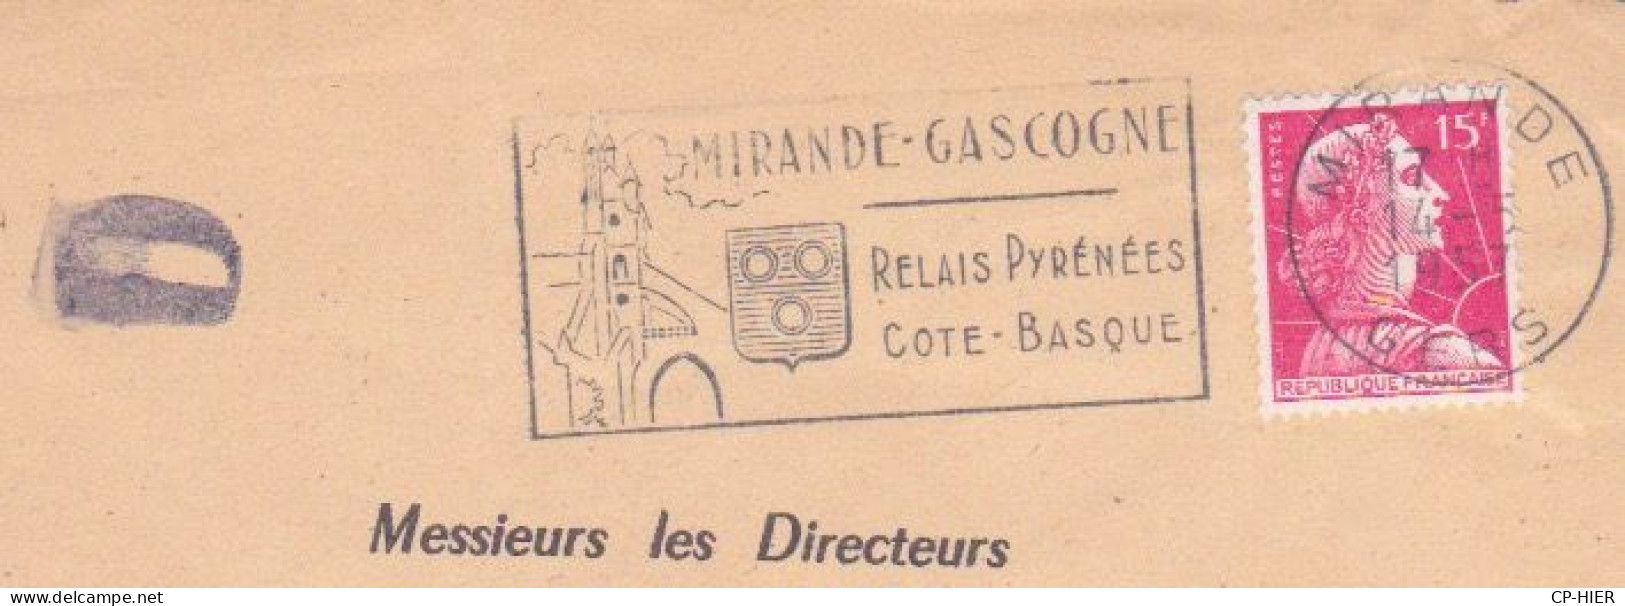 FRANCE - FLAMME  MIRANDE GASCOGNE - RELAIS PYRENEES COTE BASQUE - LETTRE D - ADRESSE CONTENTIEUX EUROPEEN PARIS - Maschinenstempel (Werbestempel)